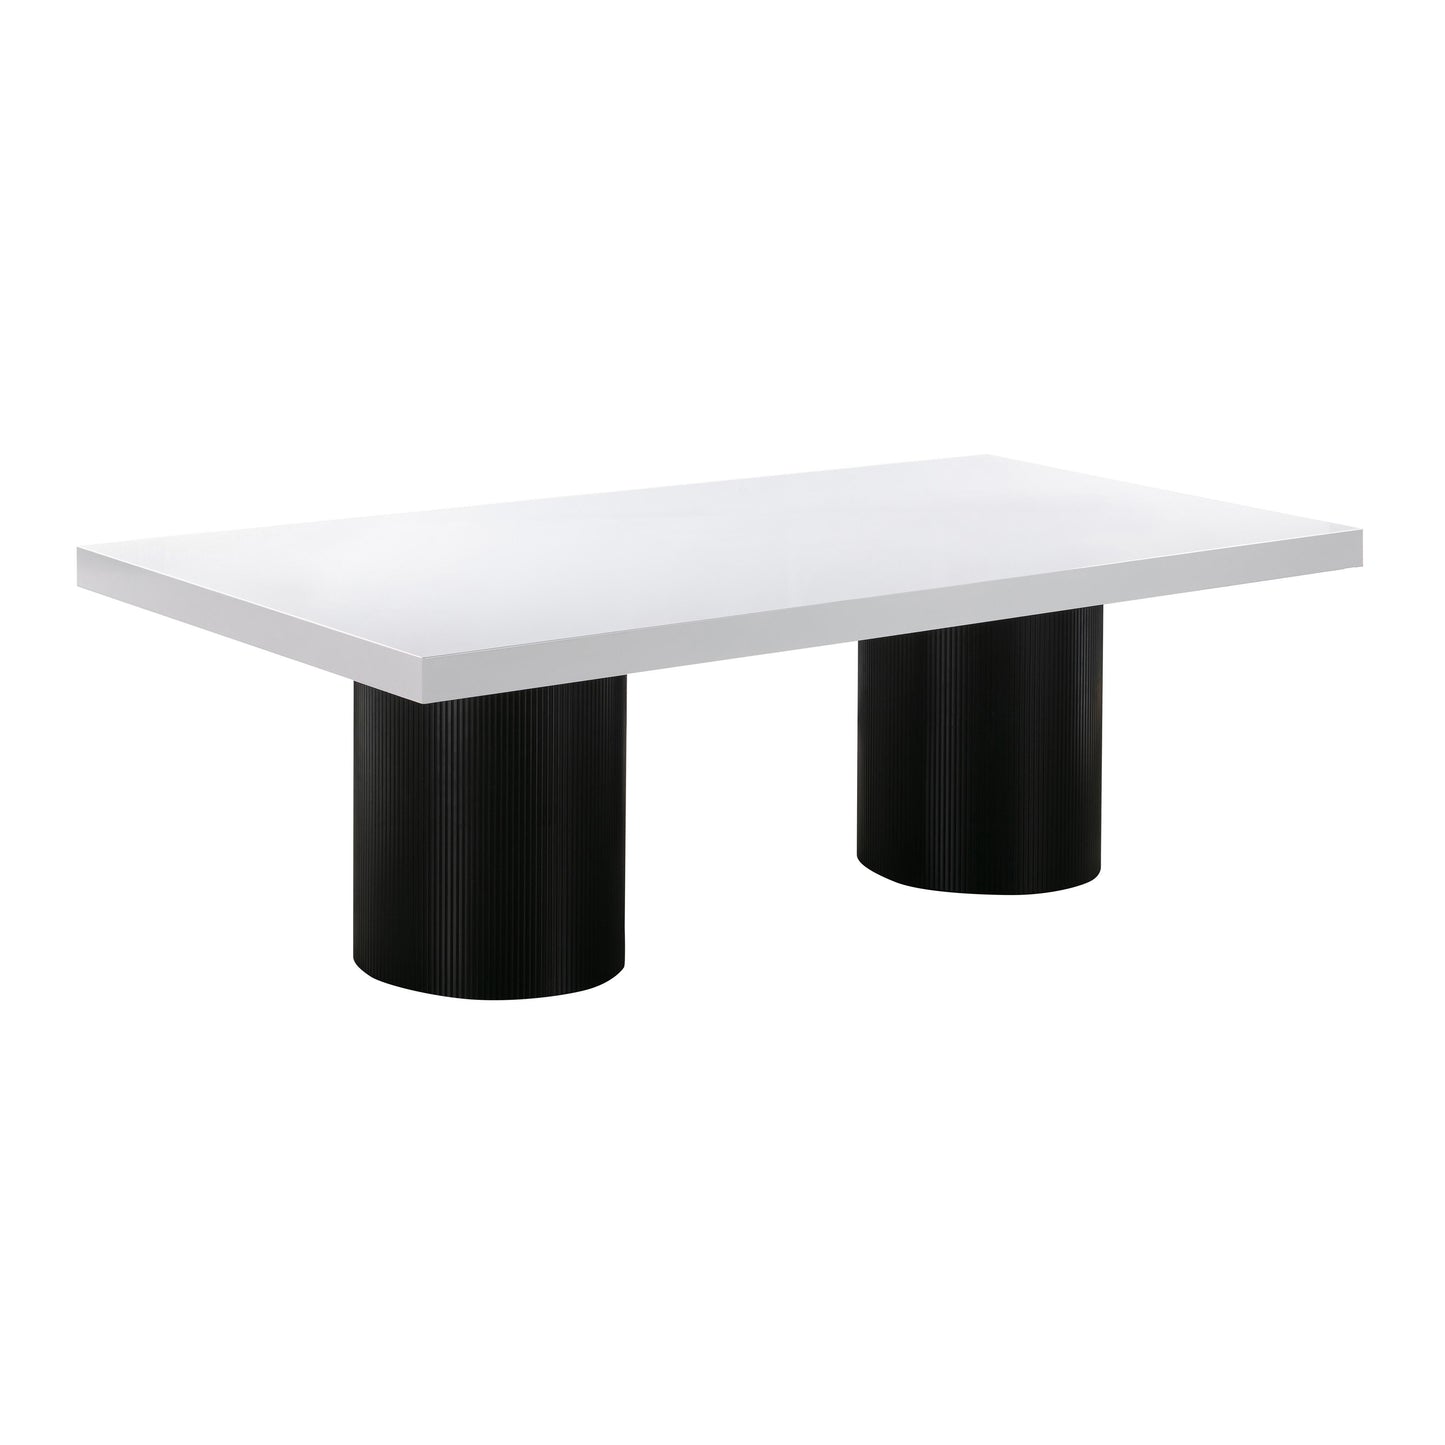 Tov Furniture Nova White Lacquer Dining Table